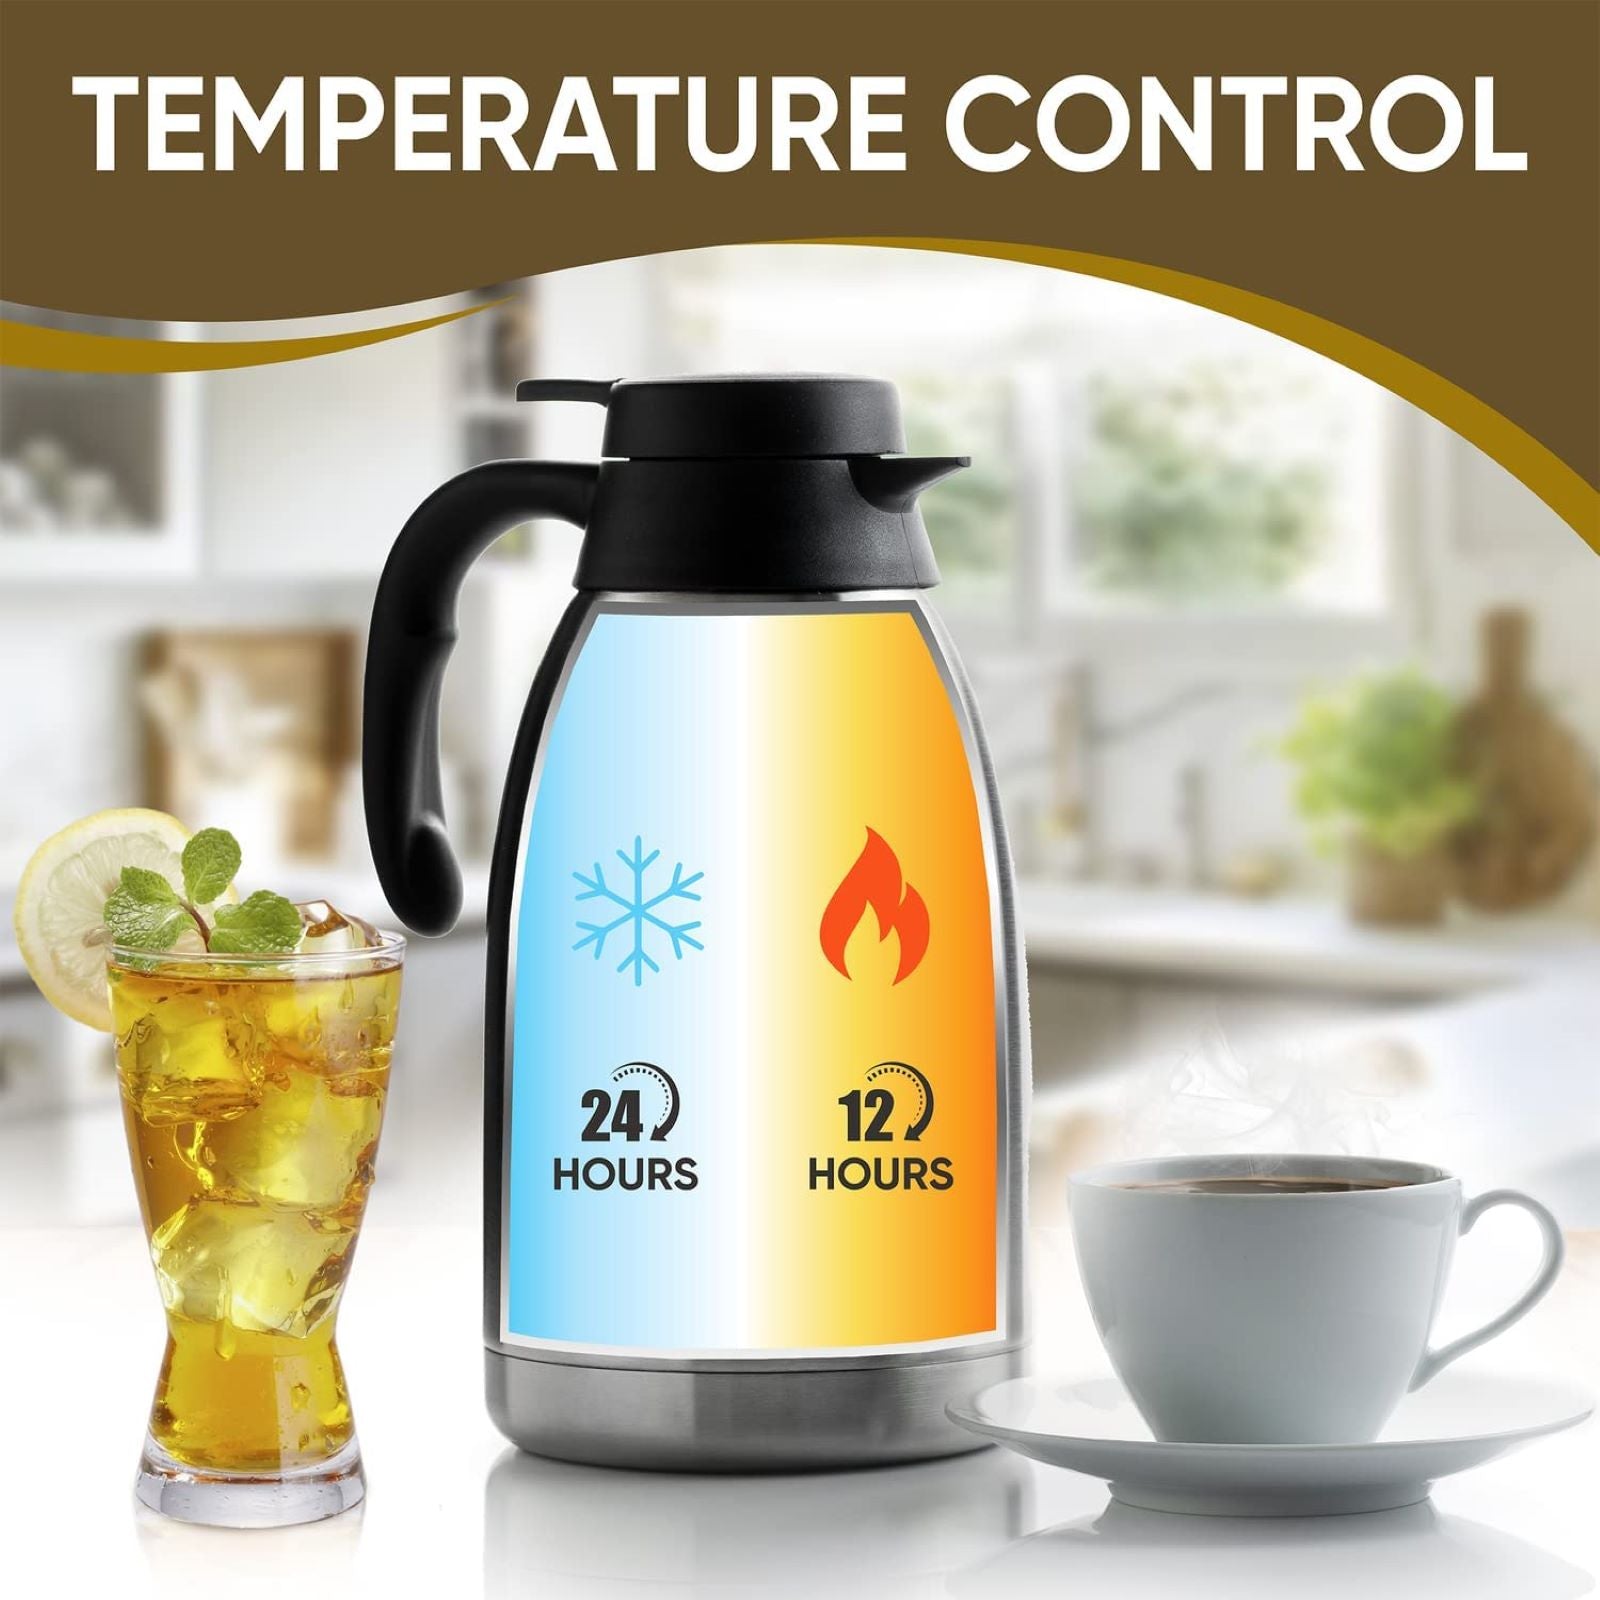 Thermal Vacuum Insulated Coffee Carafe - 800 mL, Metal Grey